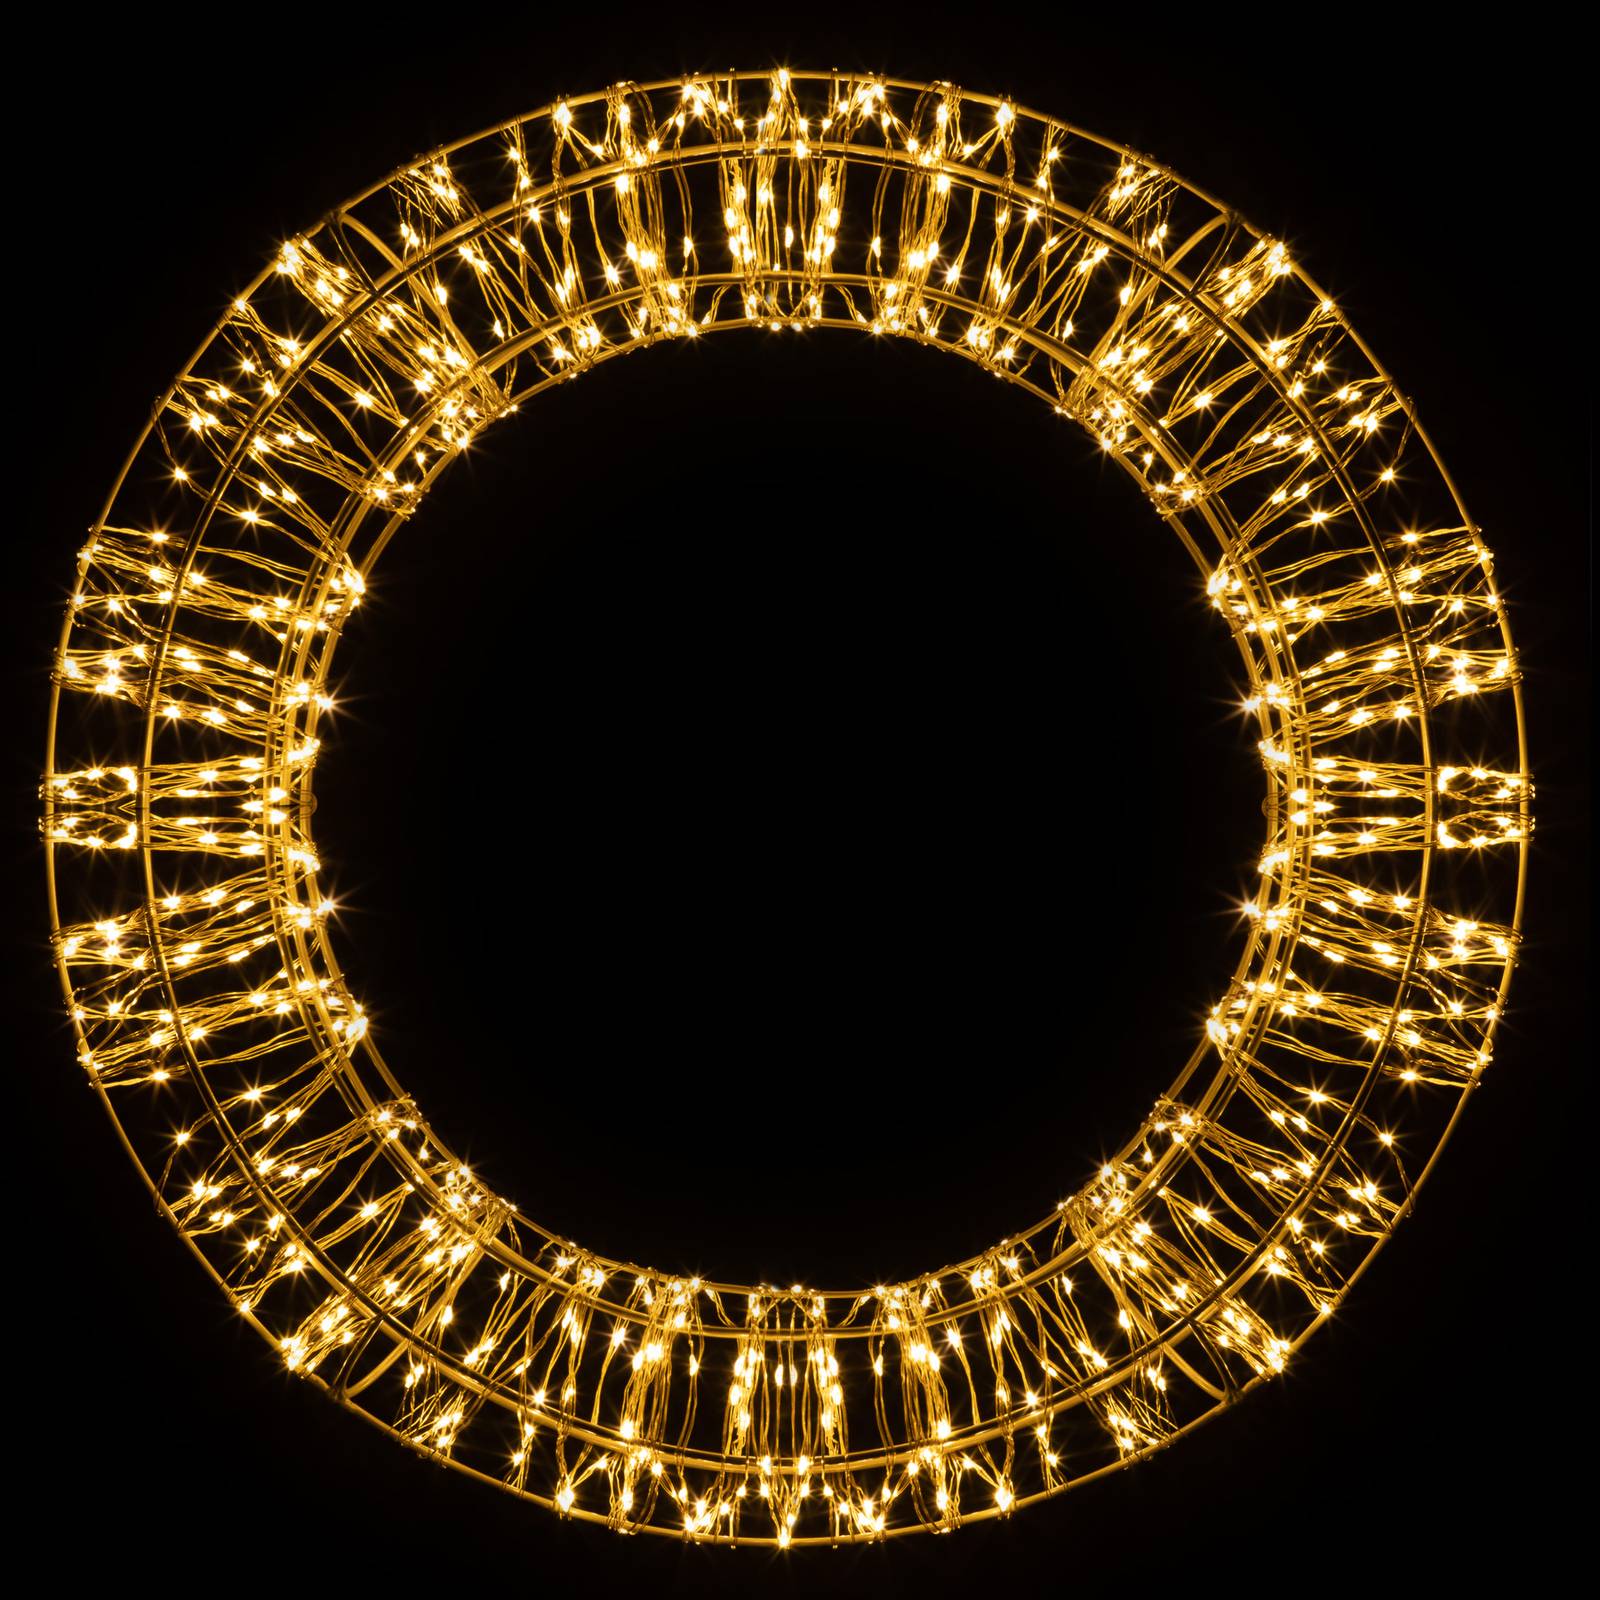 LED-Weihnachtskranz, gold, 600 LEDs, Ø 40cm von Christmas United